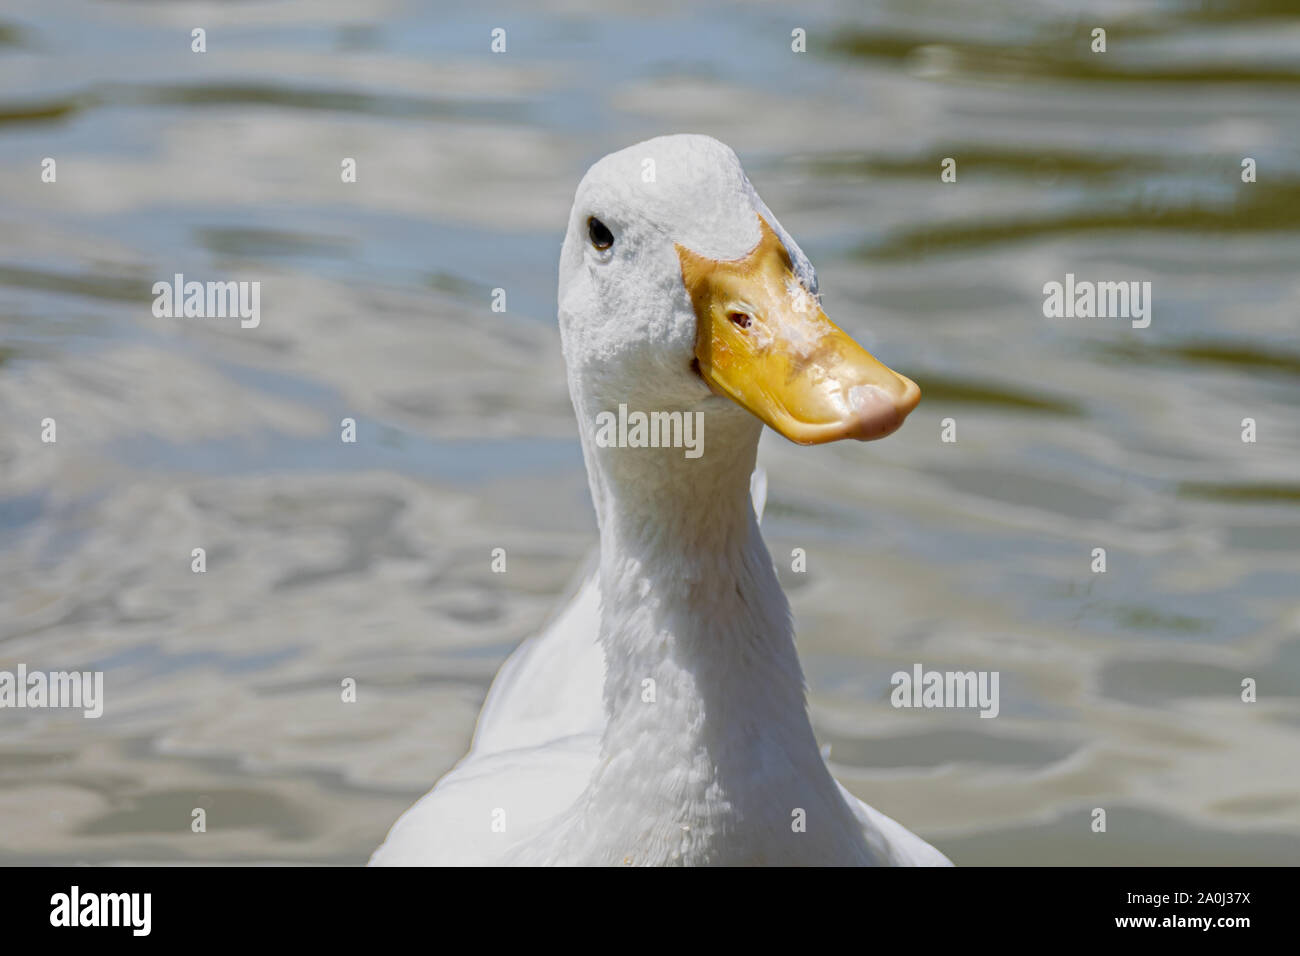 Portrait of a curious white pekin duck Stock Photo